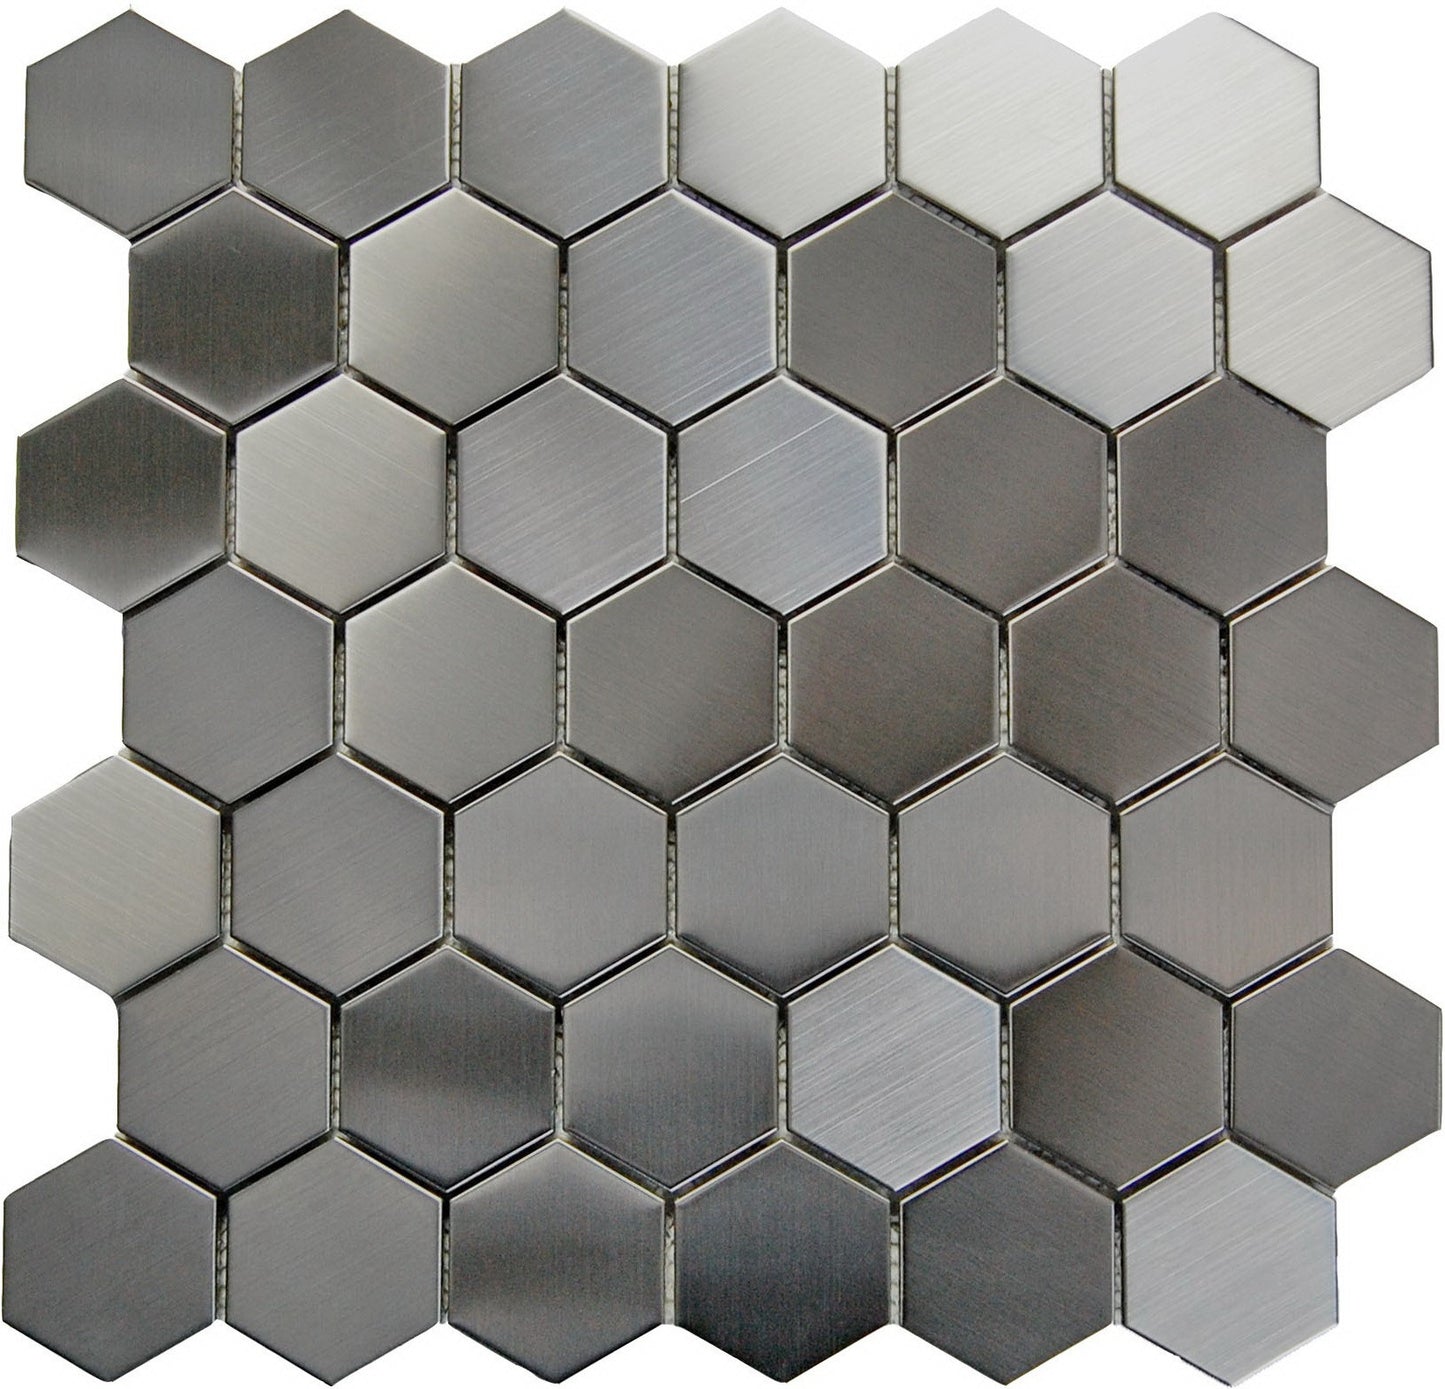 BRO Stainless Steel 2"x2" Hexagon Mosaic on a 12x12 Sheet